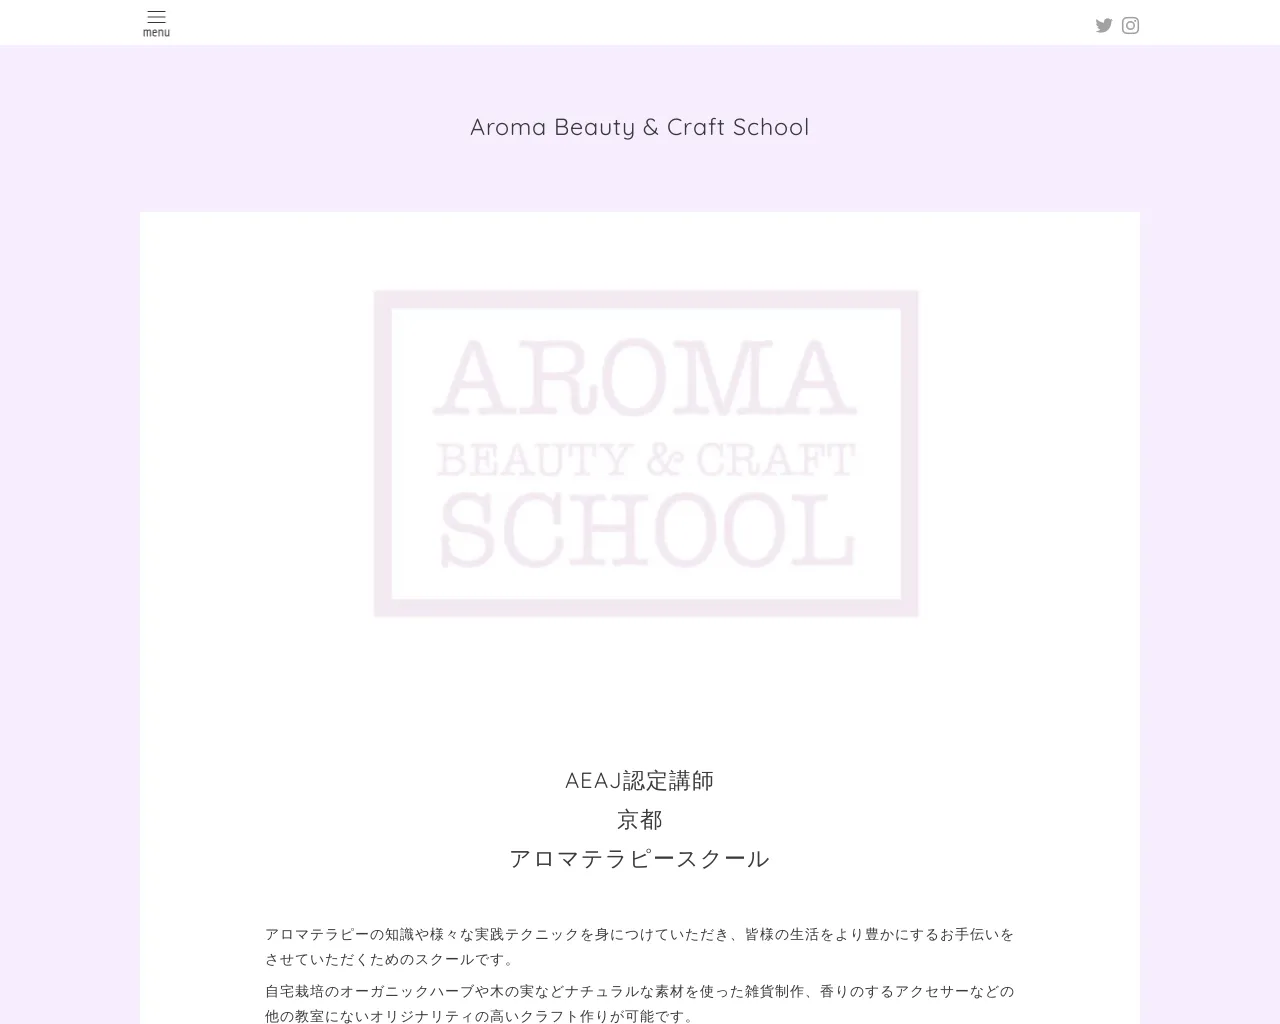 Aroma Beauty & Craft School site